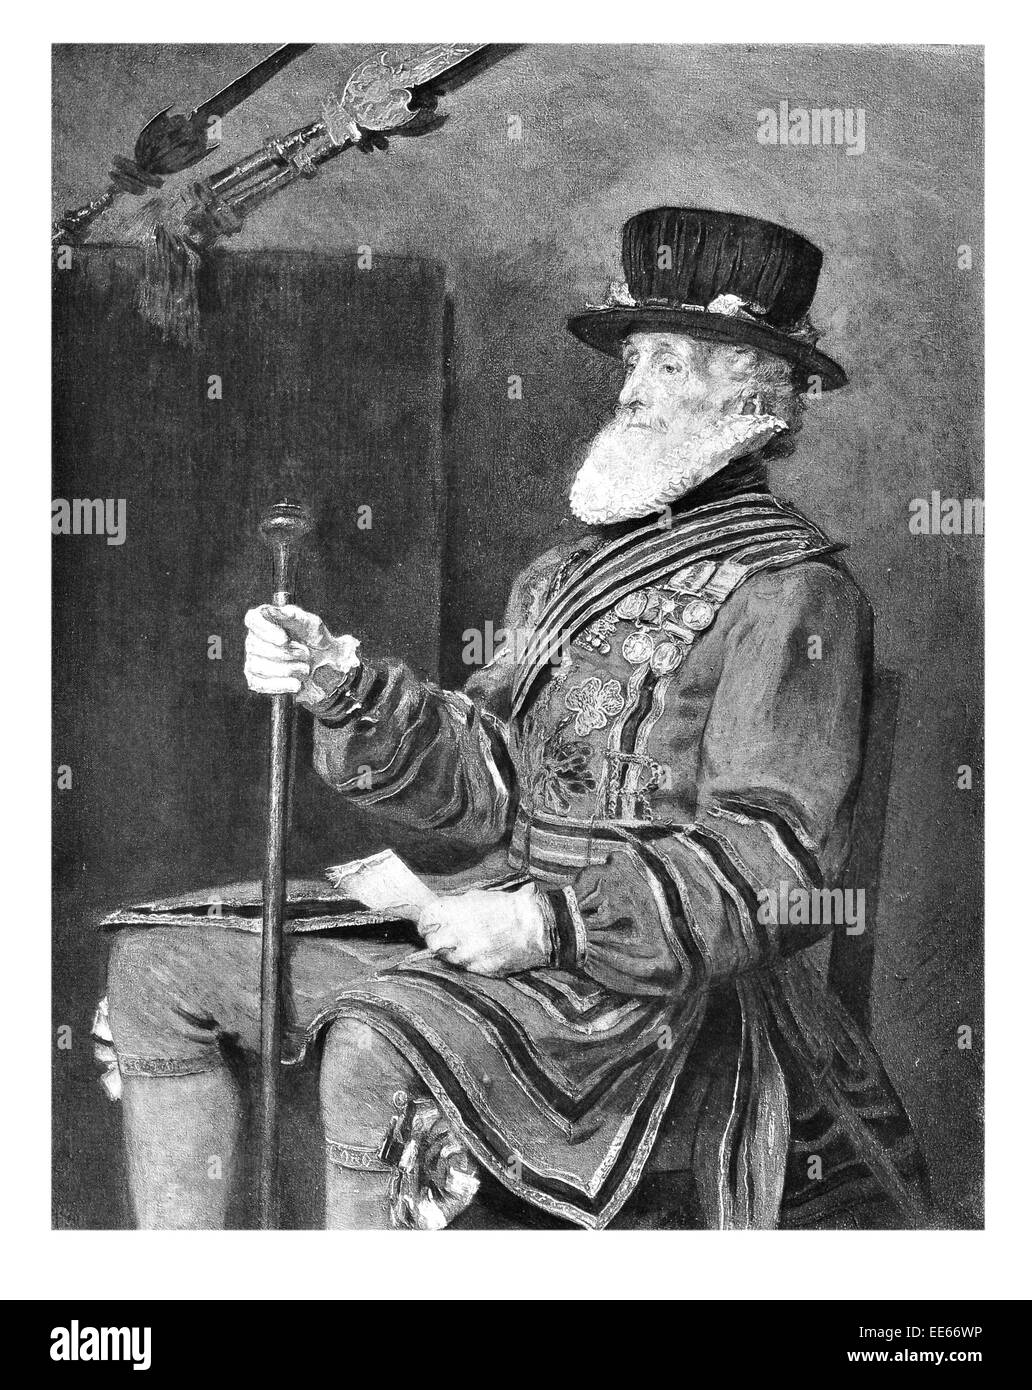 Das Beefeater Sir John Everett Millais Yeoman Of The Guard 1876 Royal Warder Tower von London Körper zeremonielle Wächter Kostüm Stockfoto